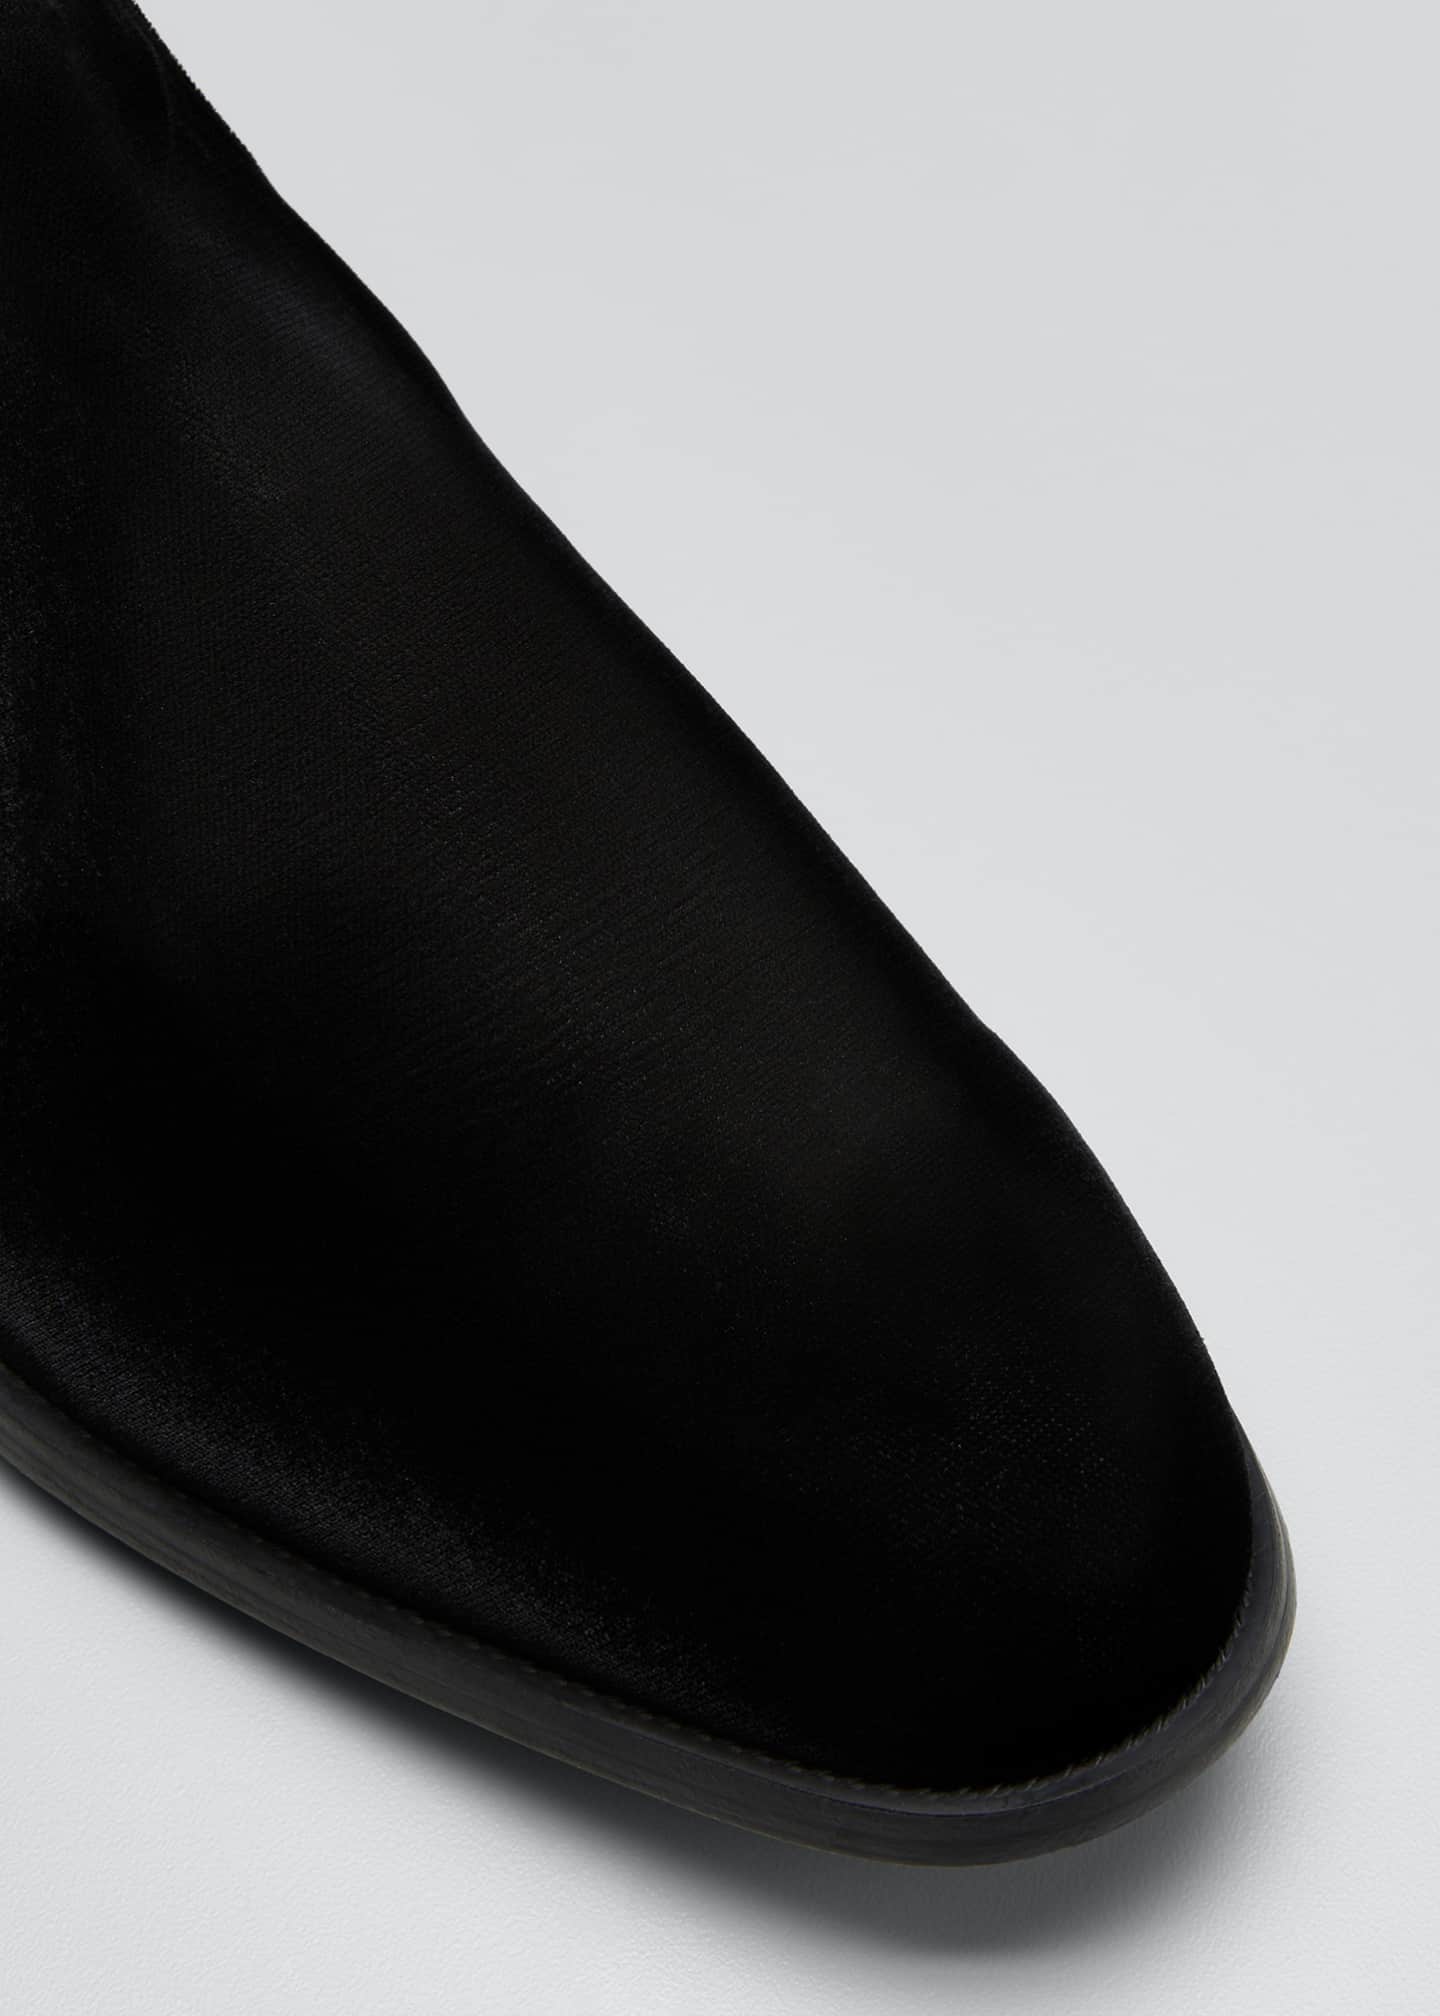 Giorgio Armani Men's Velvet Chelsea Boots - Bergdorf Goodman